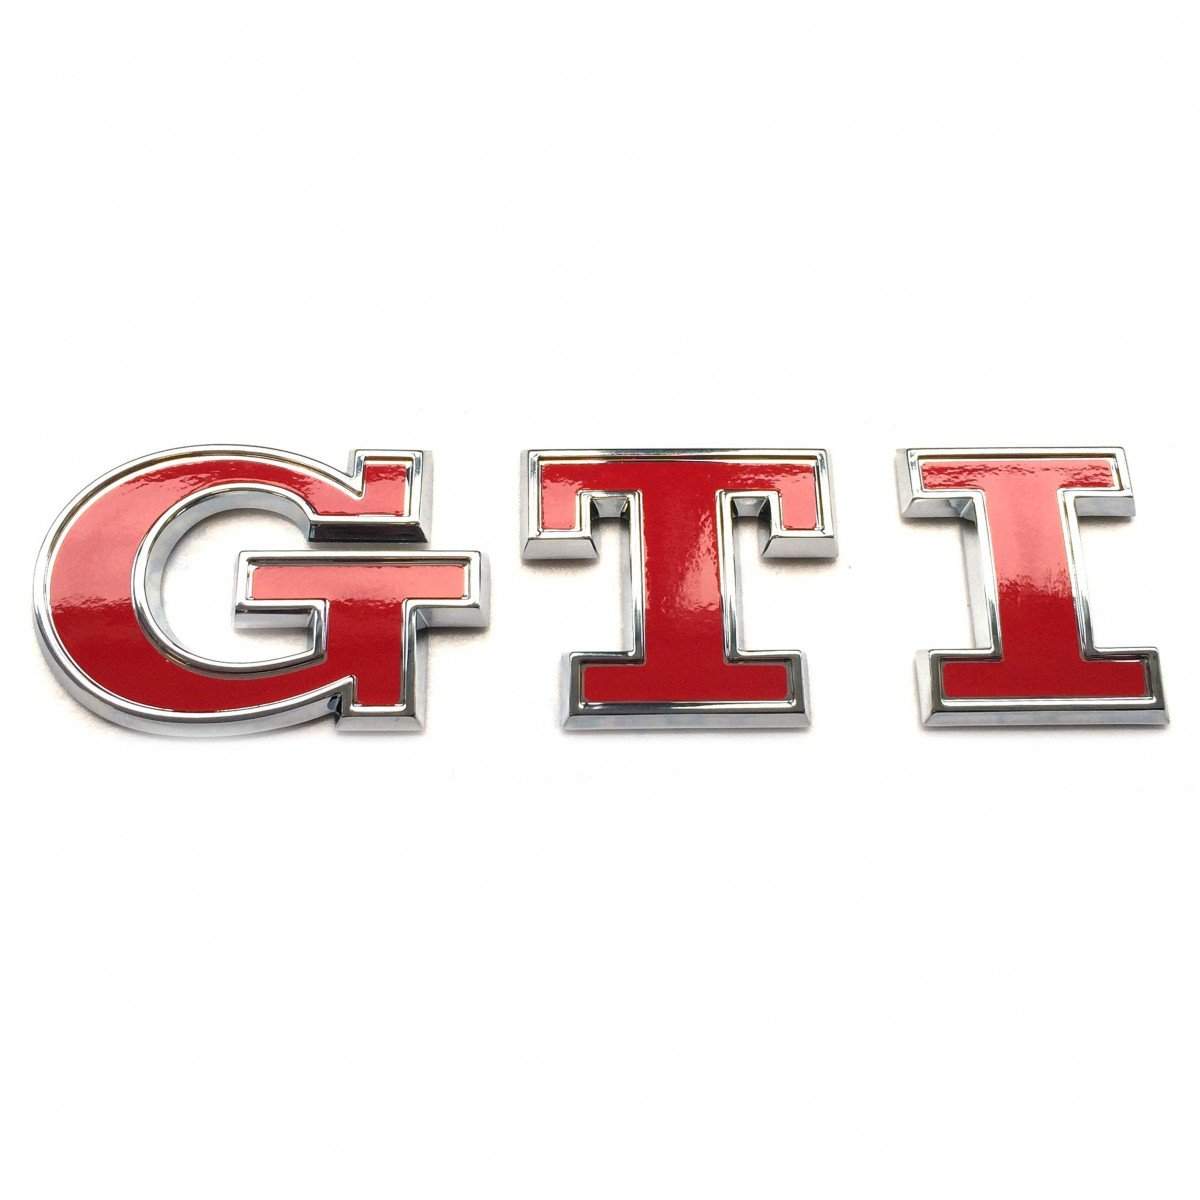 Adesivo emblema posteriore logo Gti Clubsport/Performance originale Vw Golf 7 (5G)